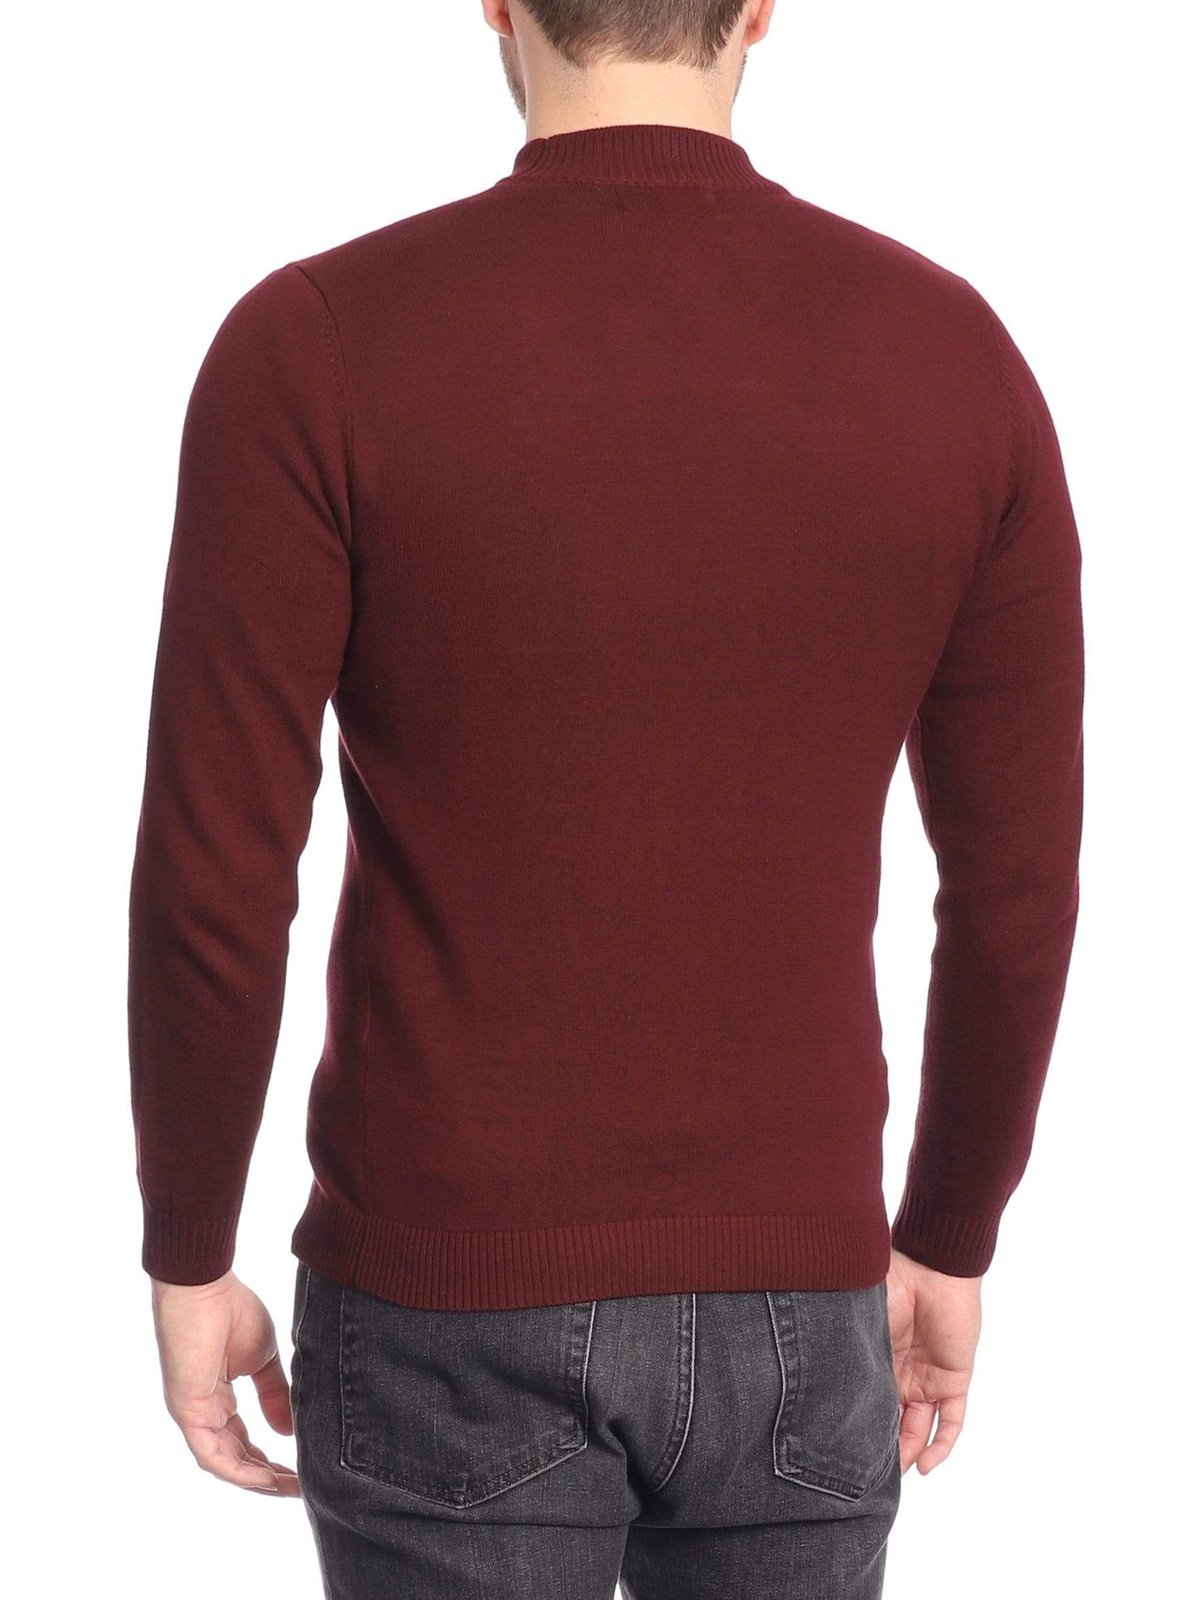 Arthur Black SWEATERS Arthur Black Men's Solid Burgundy Pullover Cotton Blend Mock Neck Sweater Shirt